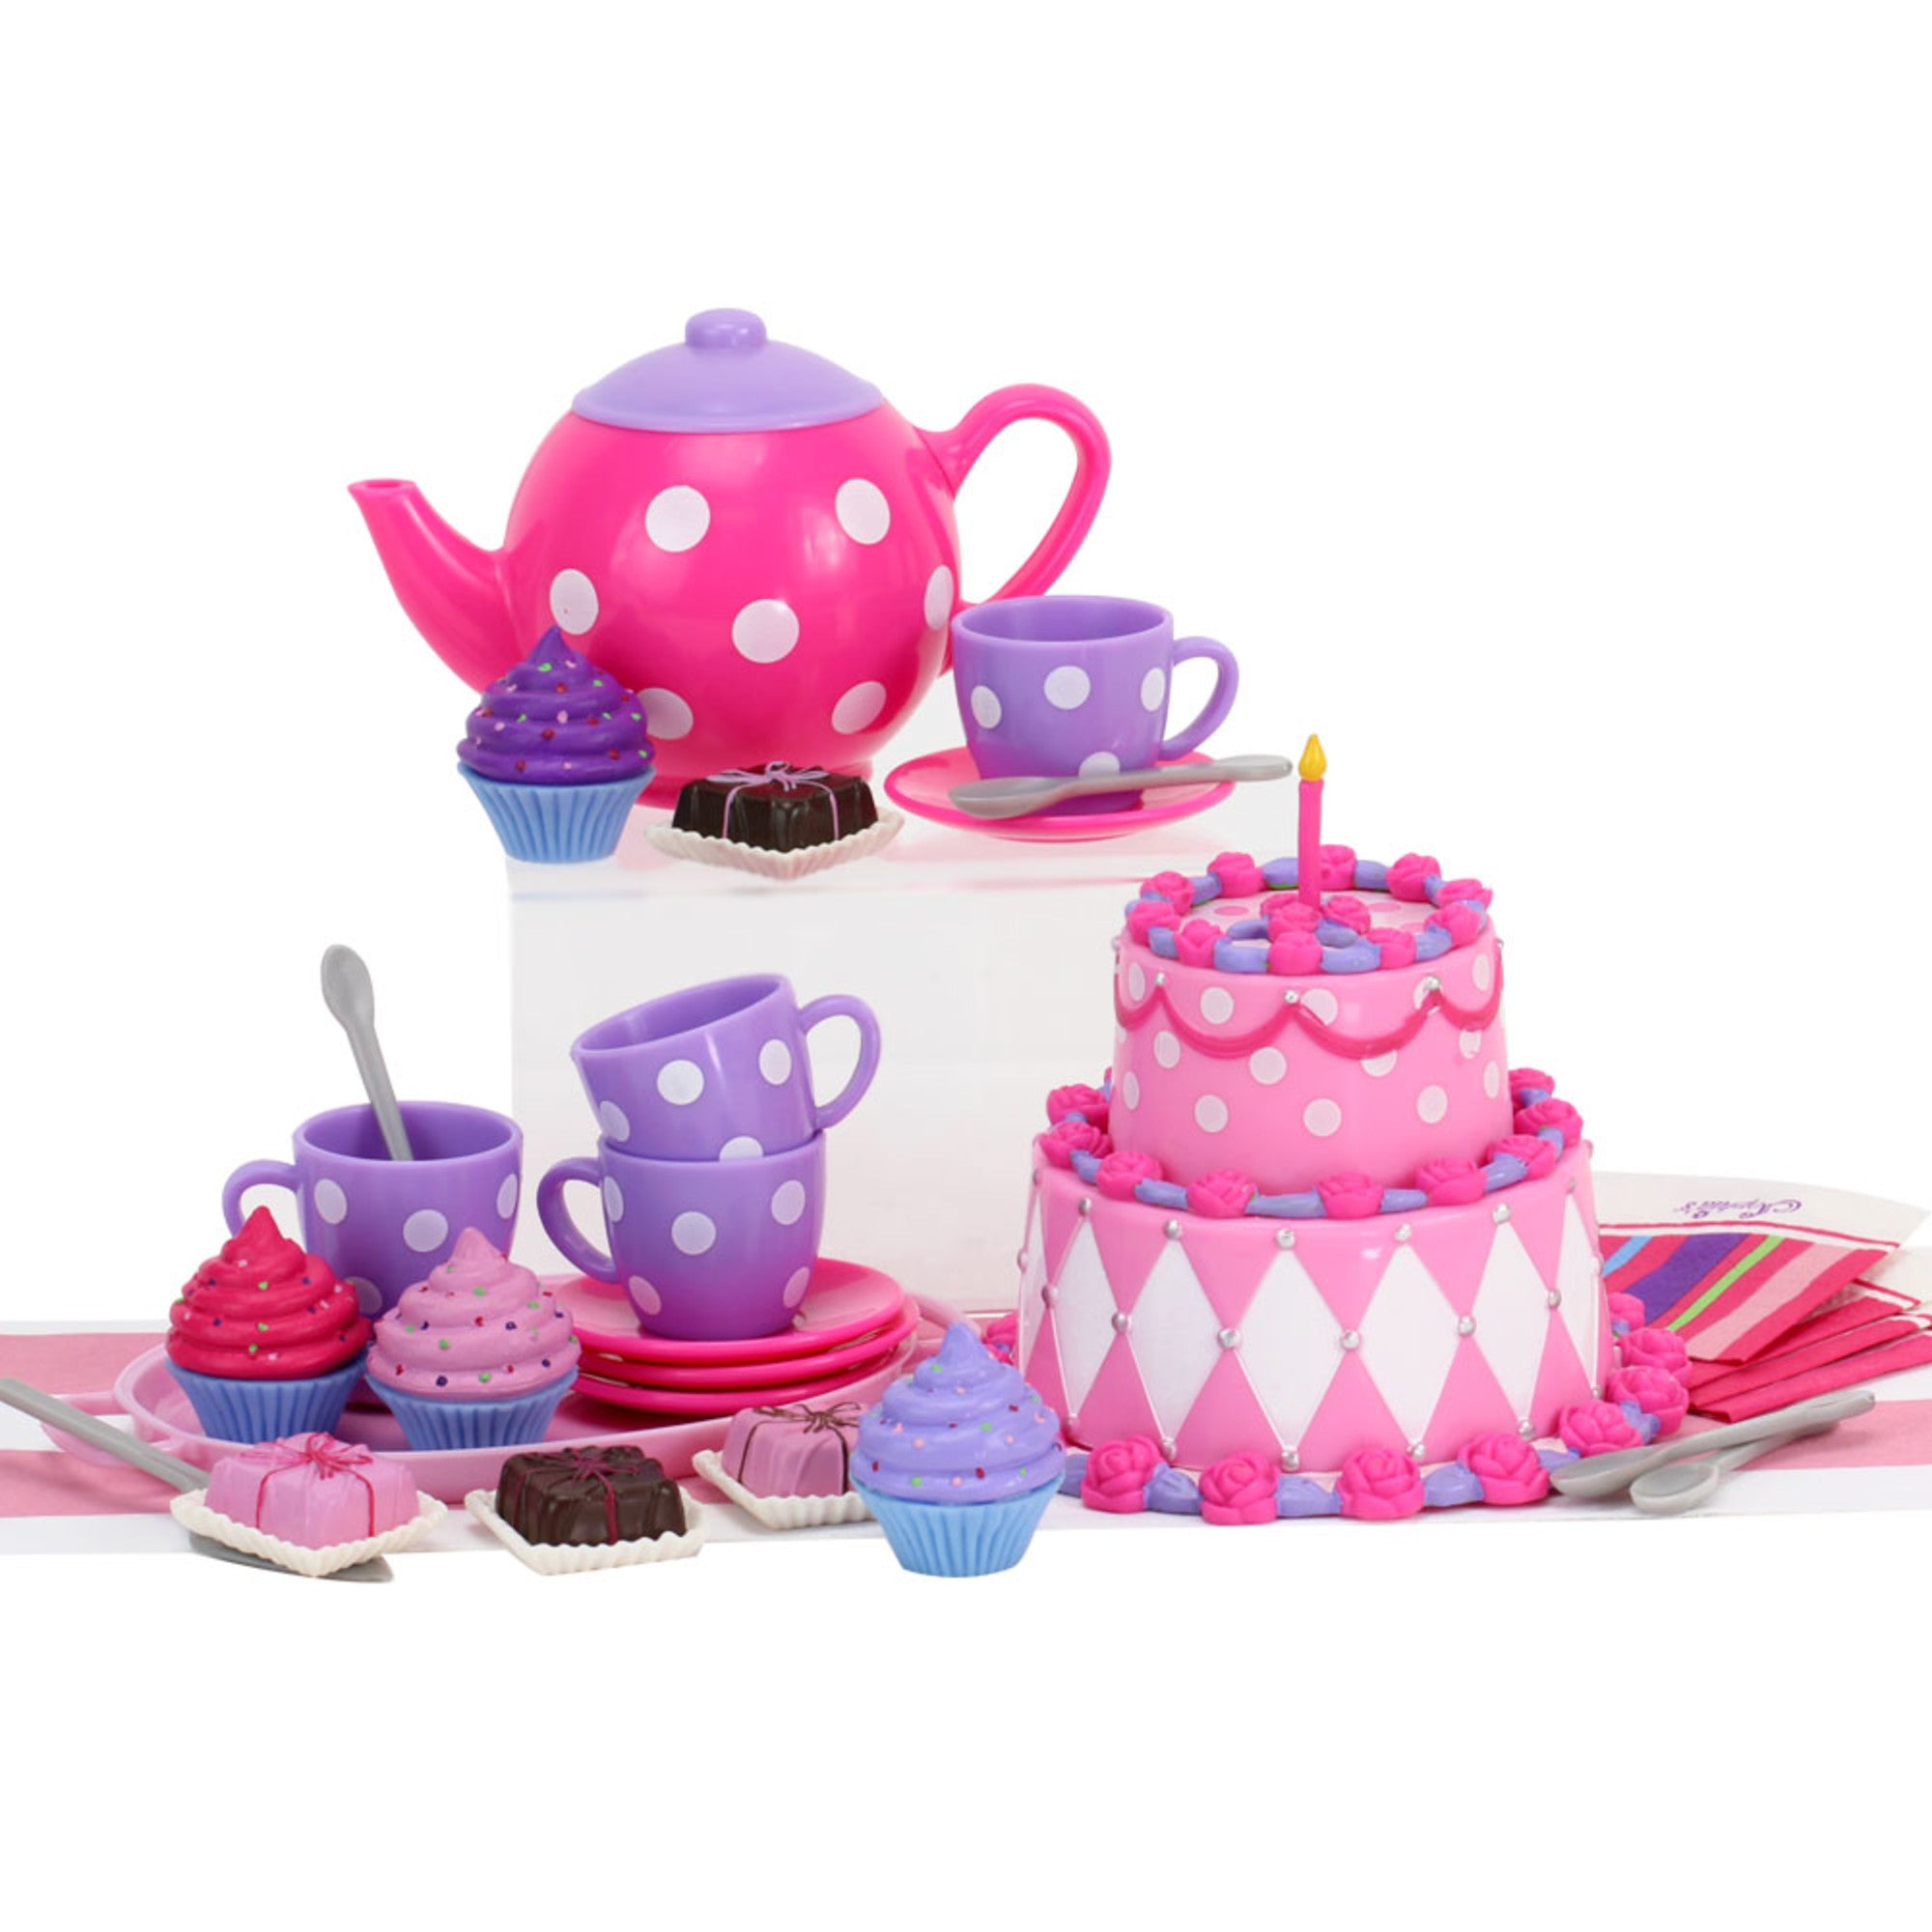 Sophias Complete Cake & Tea Party Accessories Set for 18" Dolls